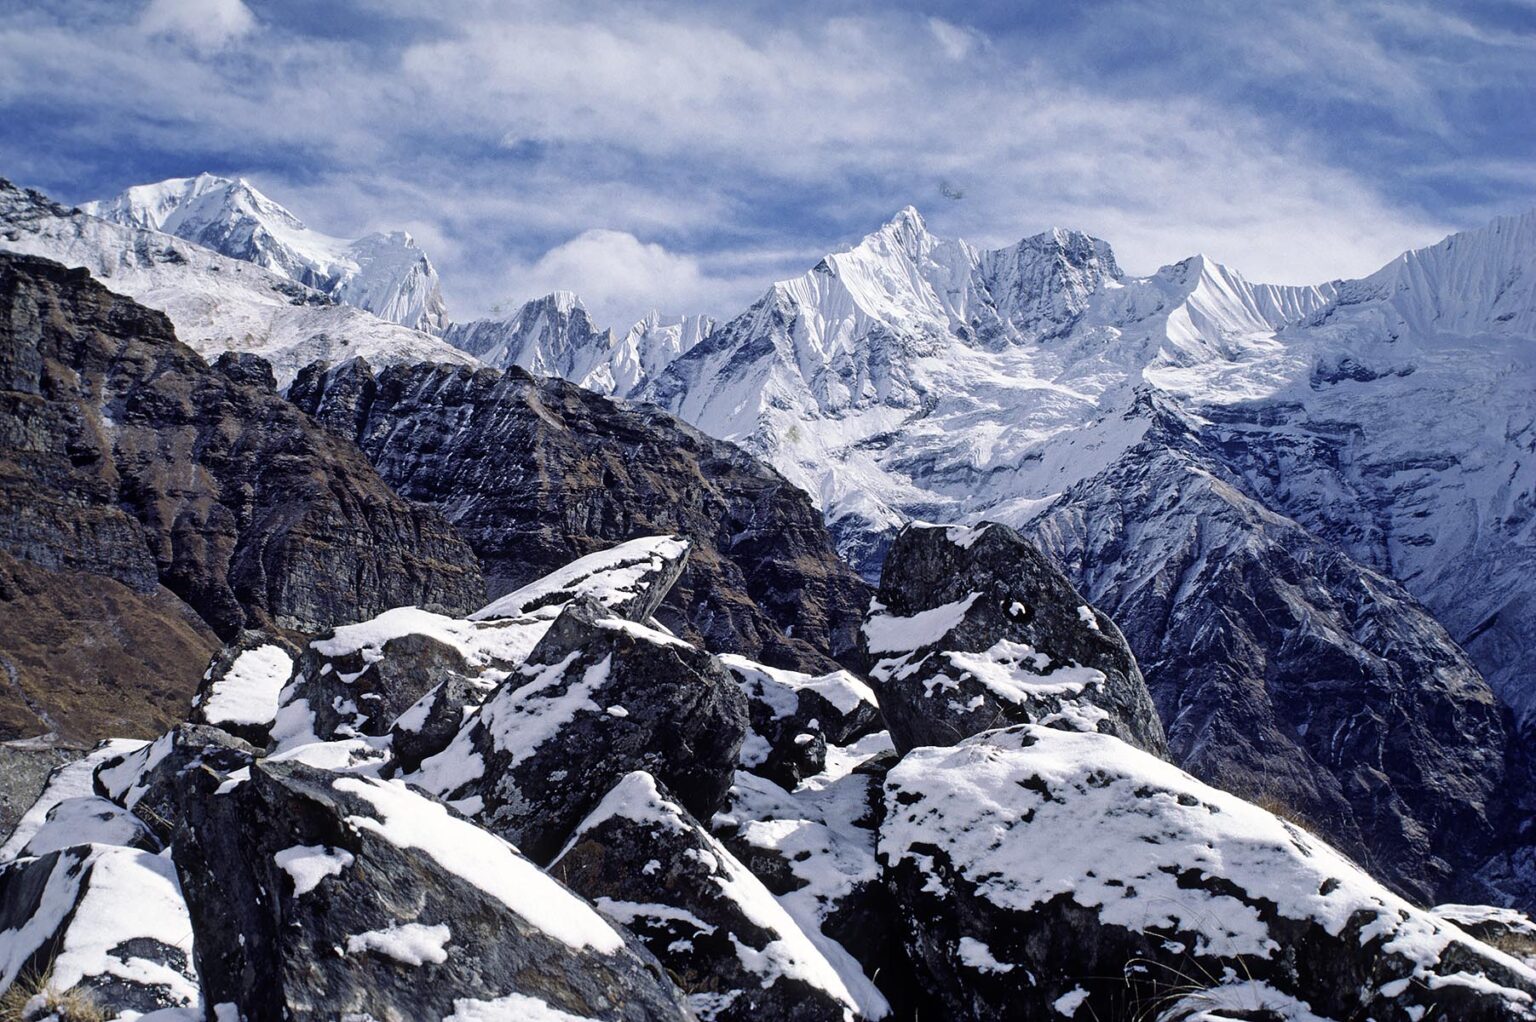 SNOWY ROCKS, barren ridges, and HIMALAYAN PEAKS including ANNAPURNA 4 - ANNAPURNA SANCTUARY,  NEPAL